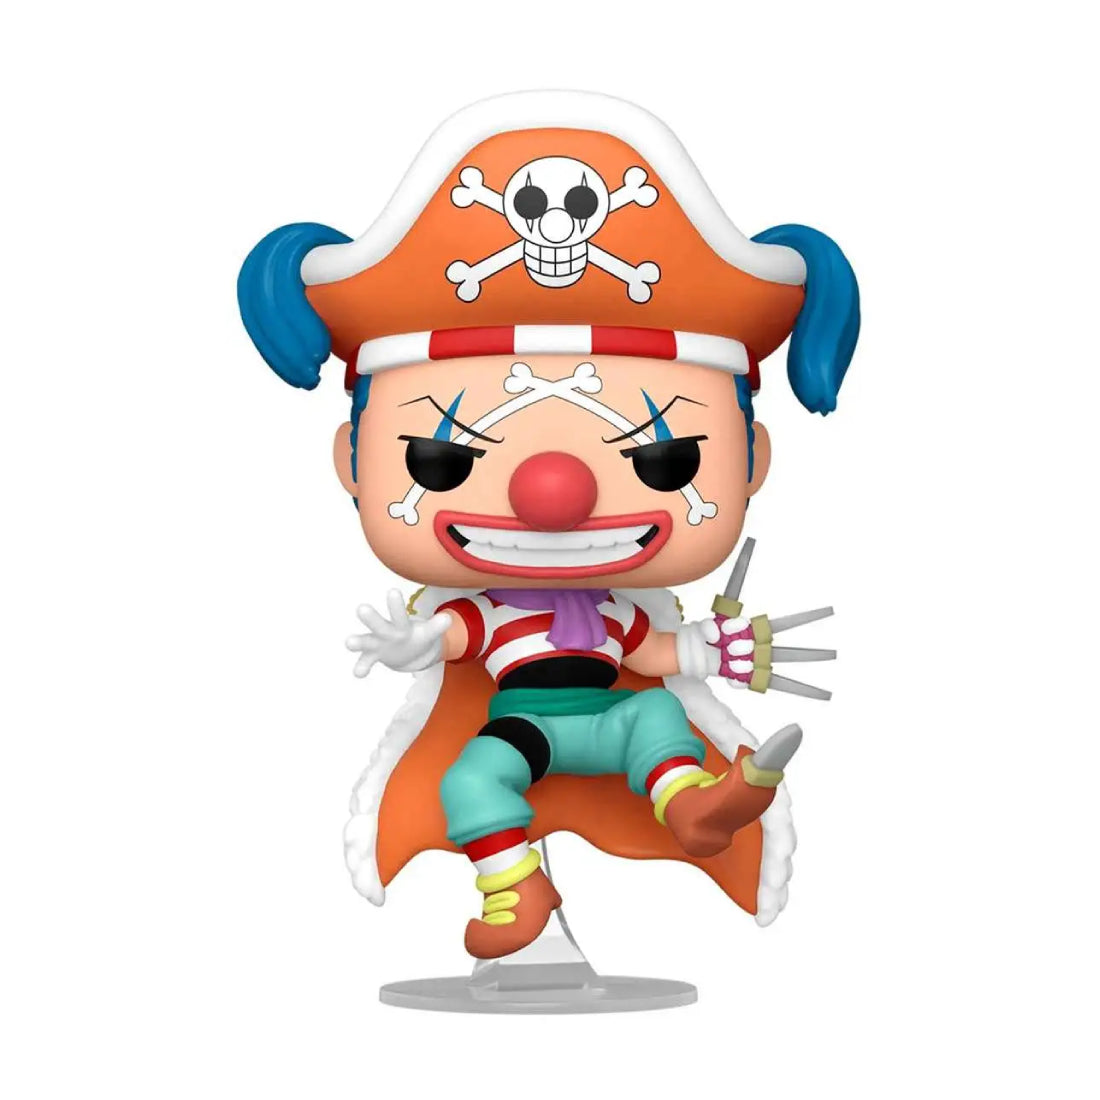 Funko Pop! Animation: One Piece - Buggy the Clown (Exc) #1276 - دمية - Store 974 | ستور ٩٧٤